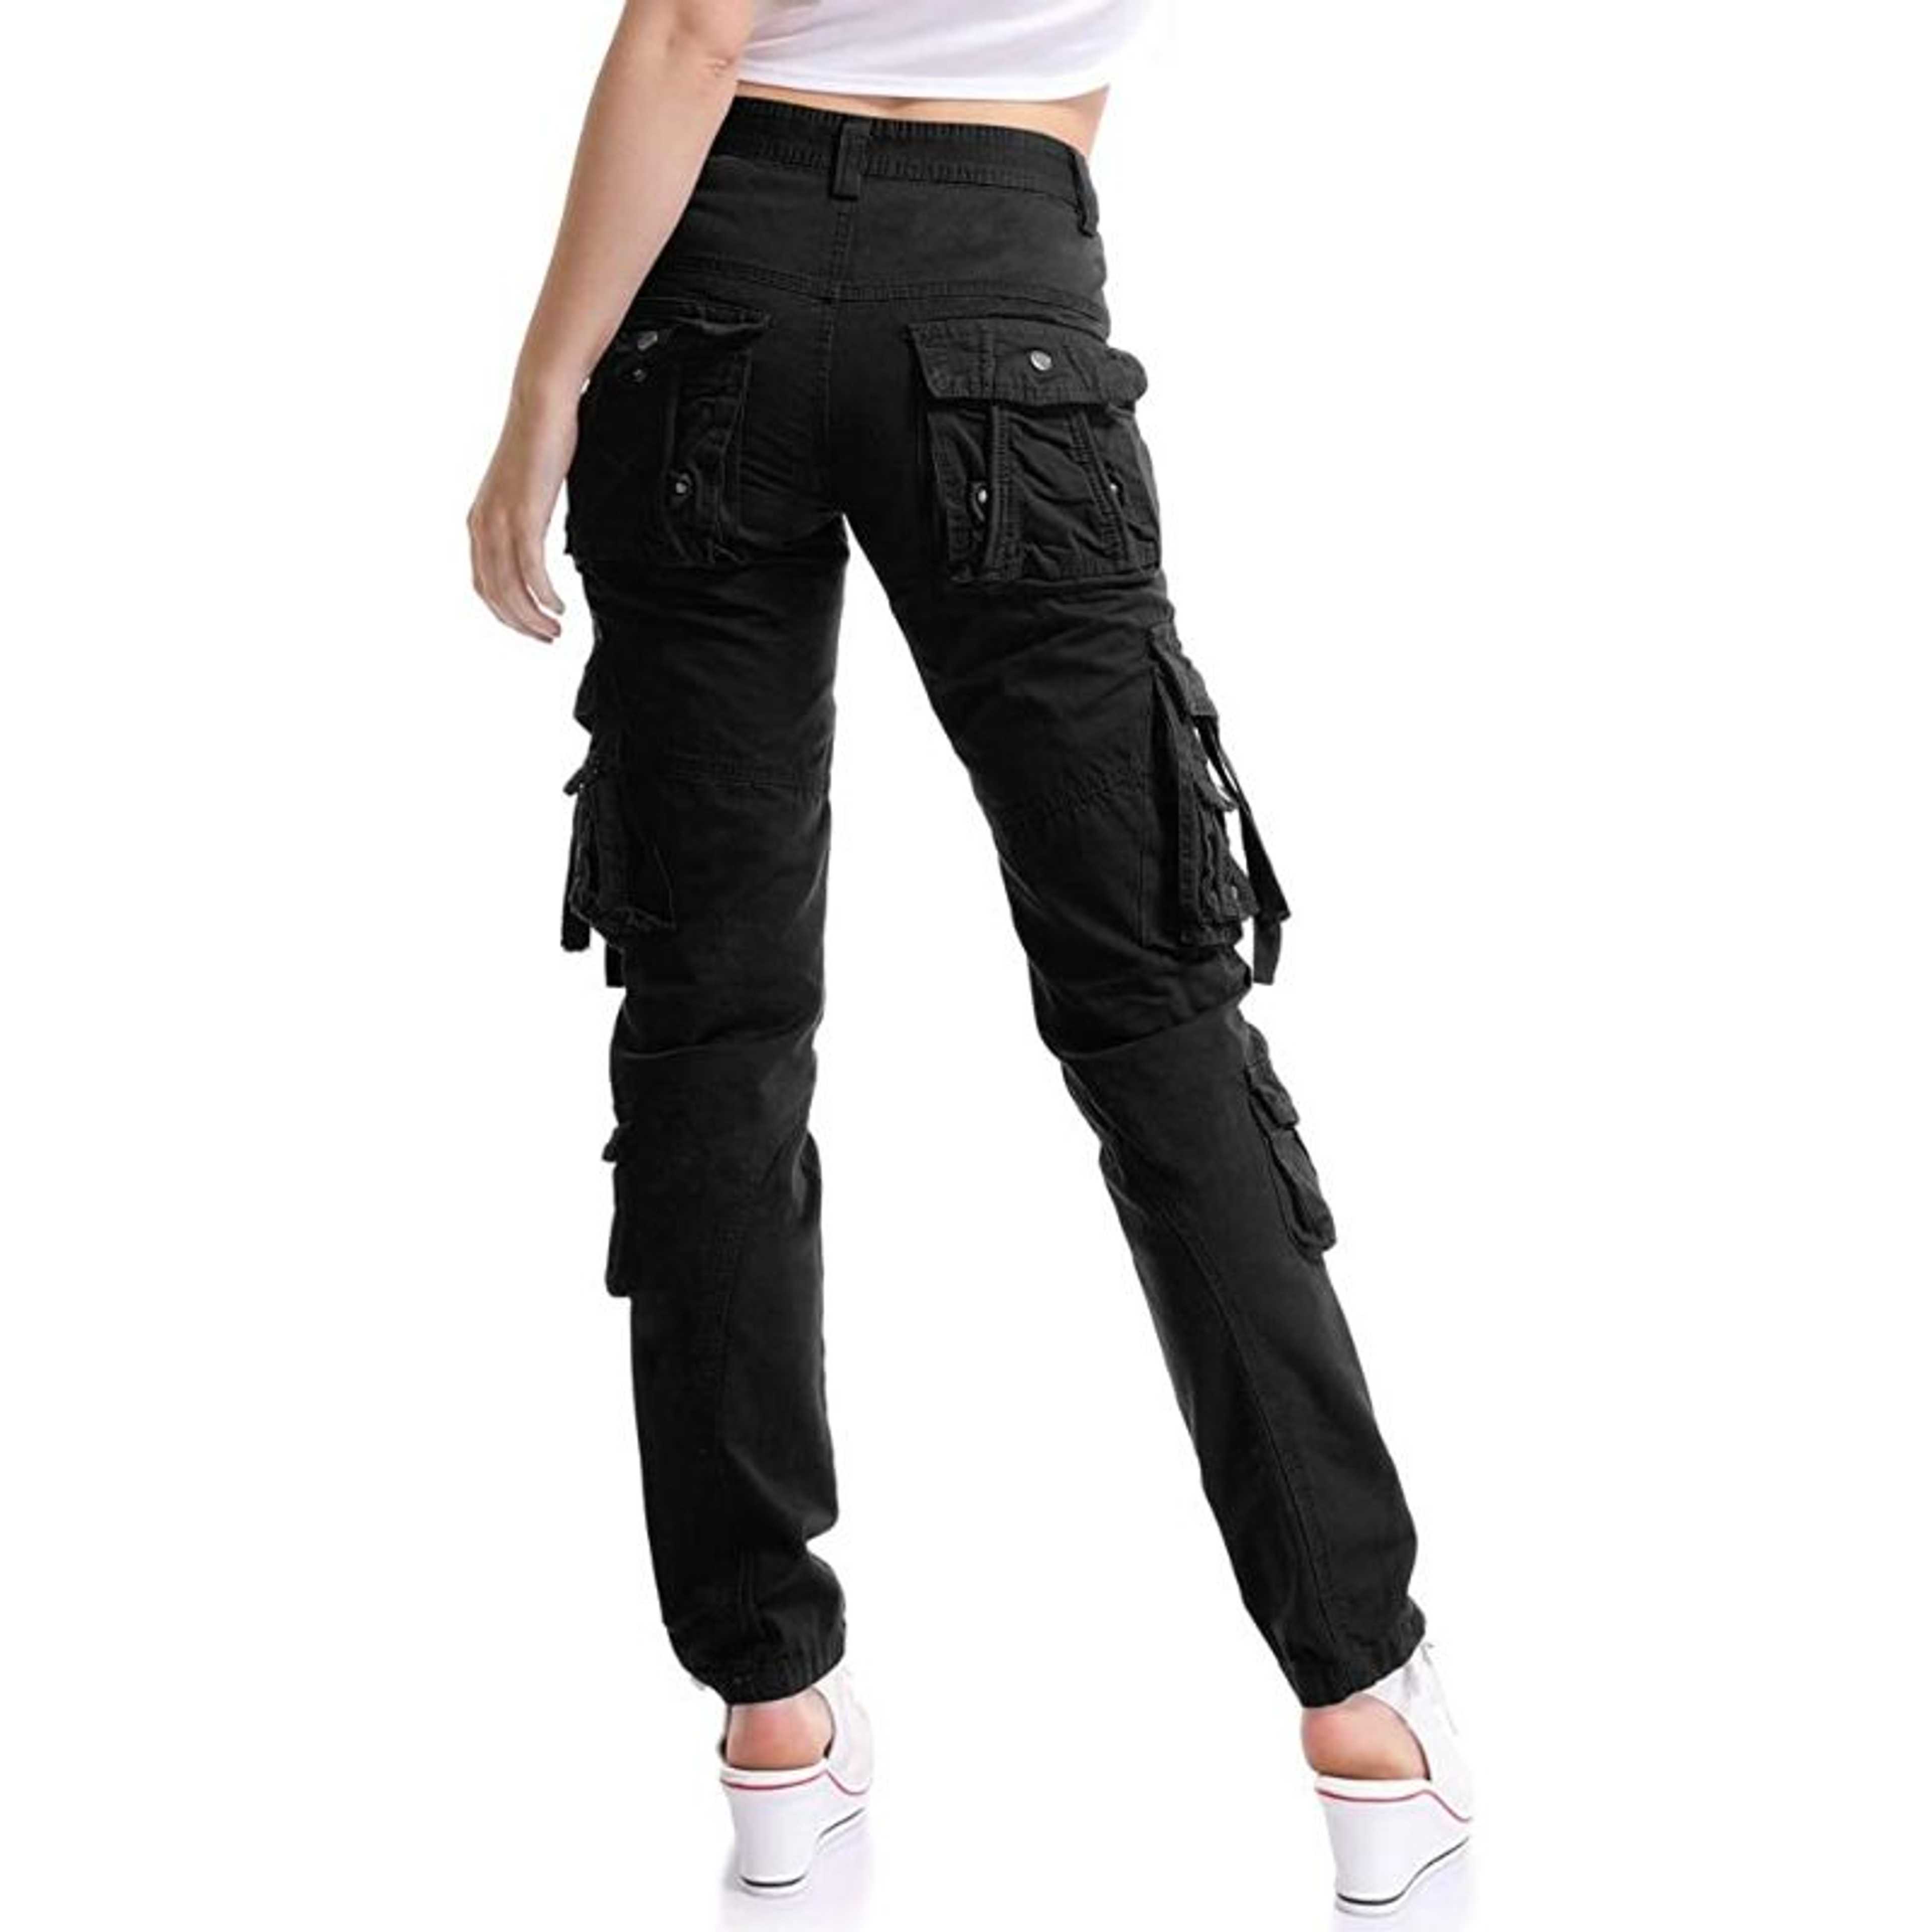 Black Rubahas Womens Cargo Trousers Ladies Trousers Jeans Pants